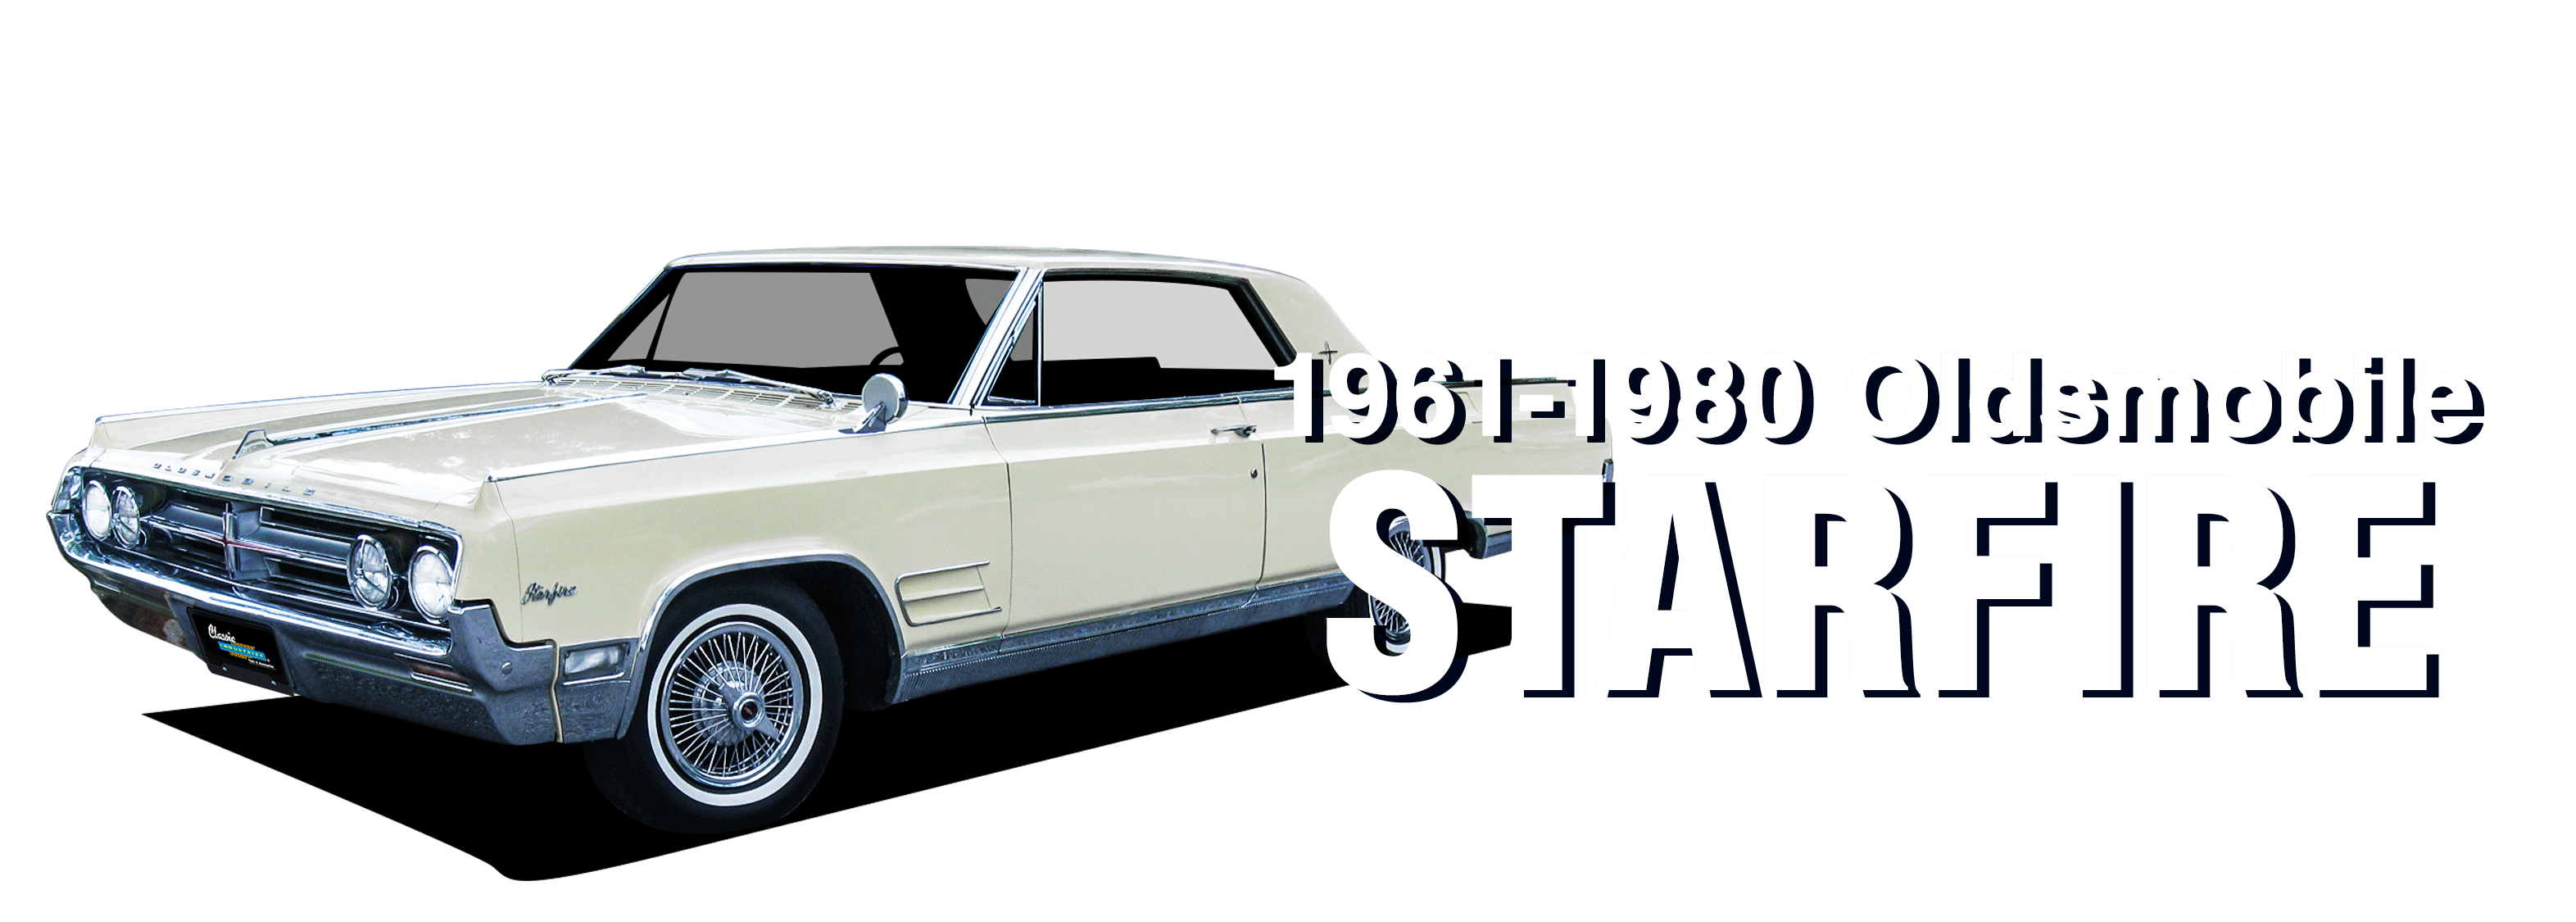 Oldsmobile-Starfire-vehicle-desktop_V2